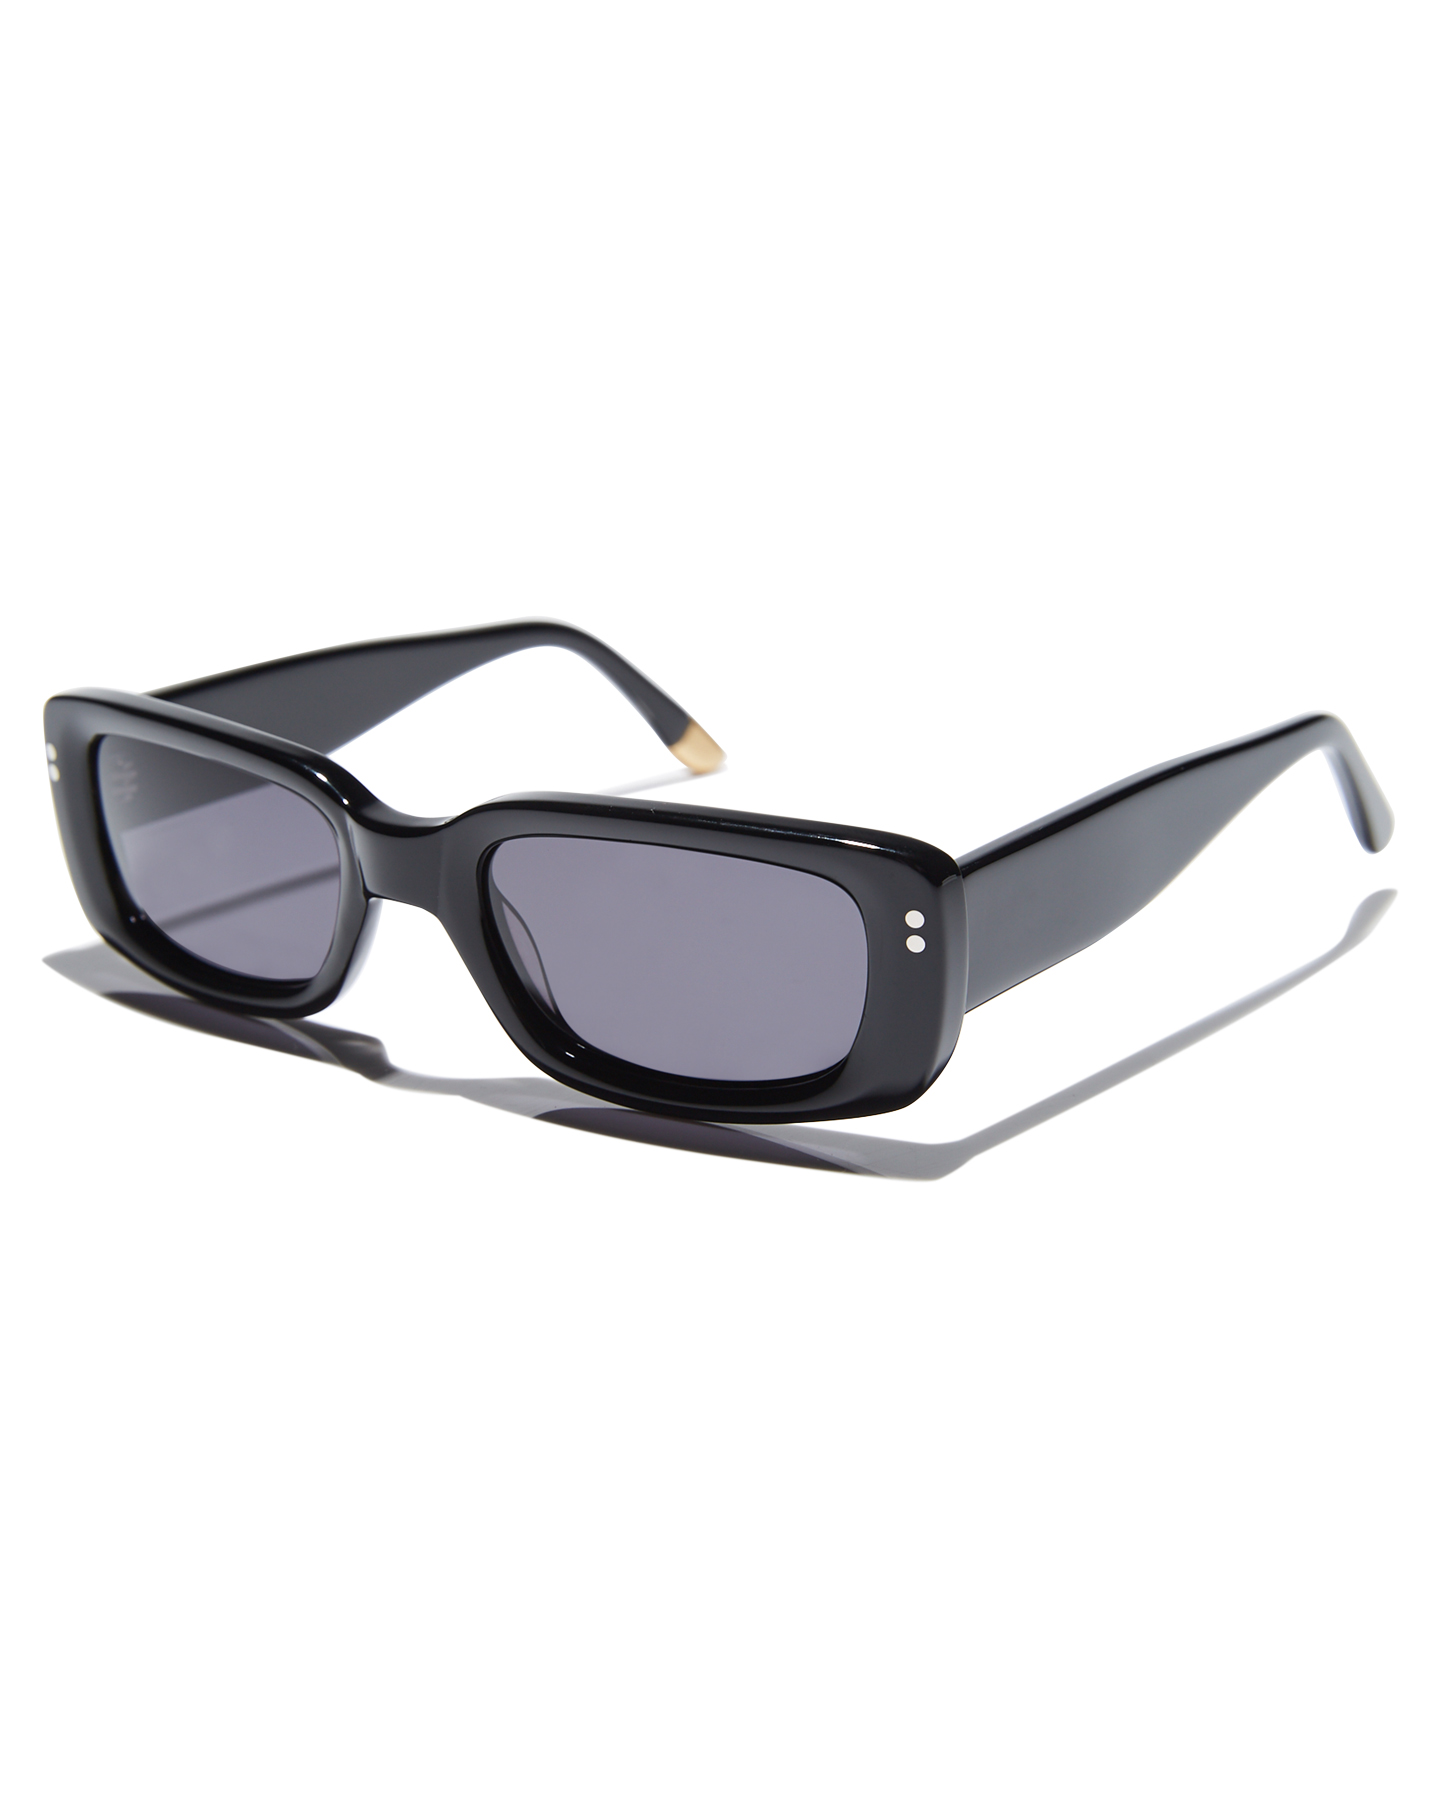 Sabre Cuda Sunglasses - Black Gloss | SurfStitch